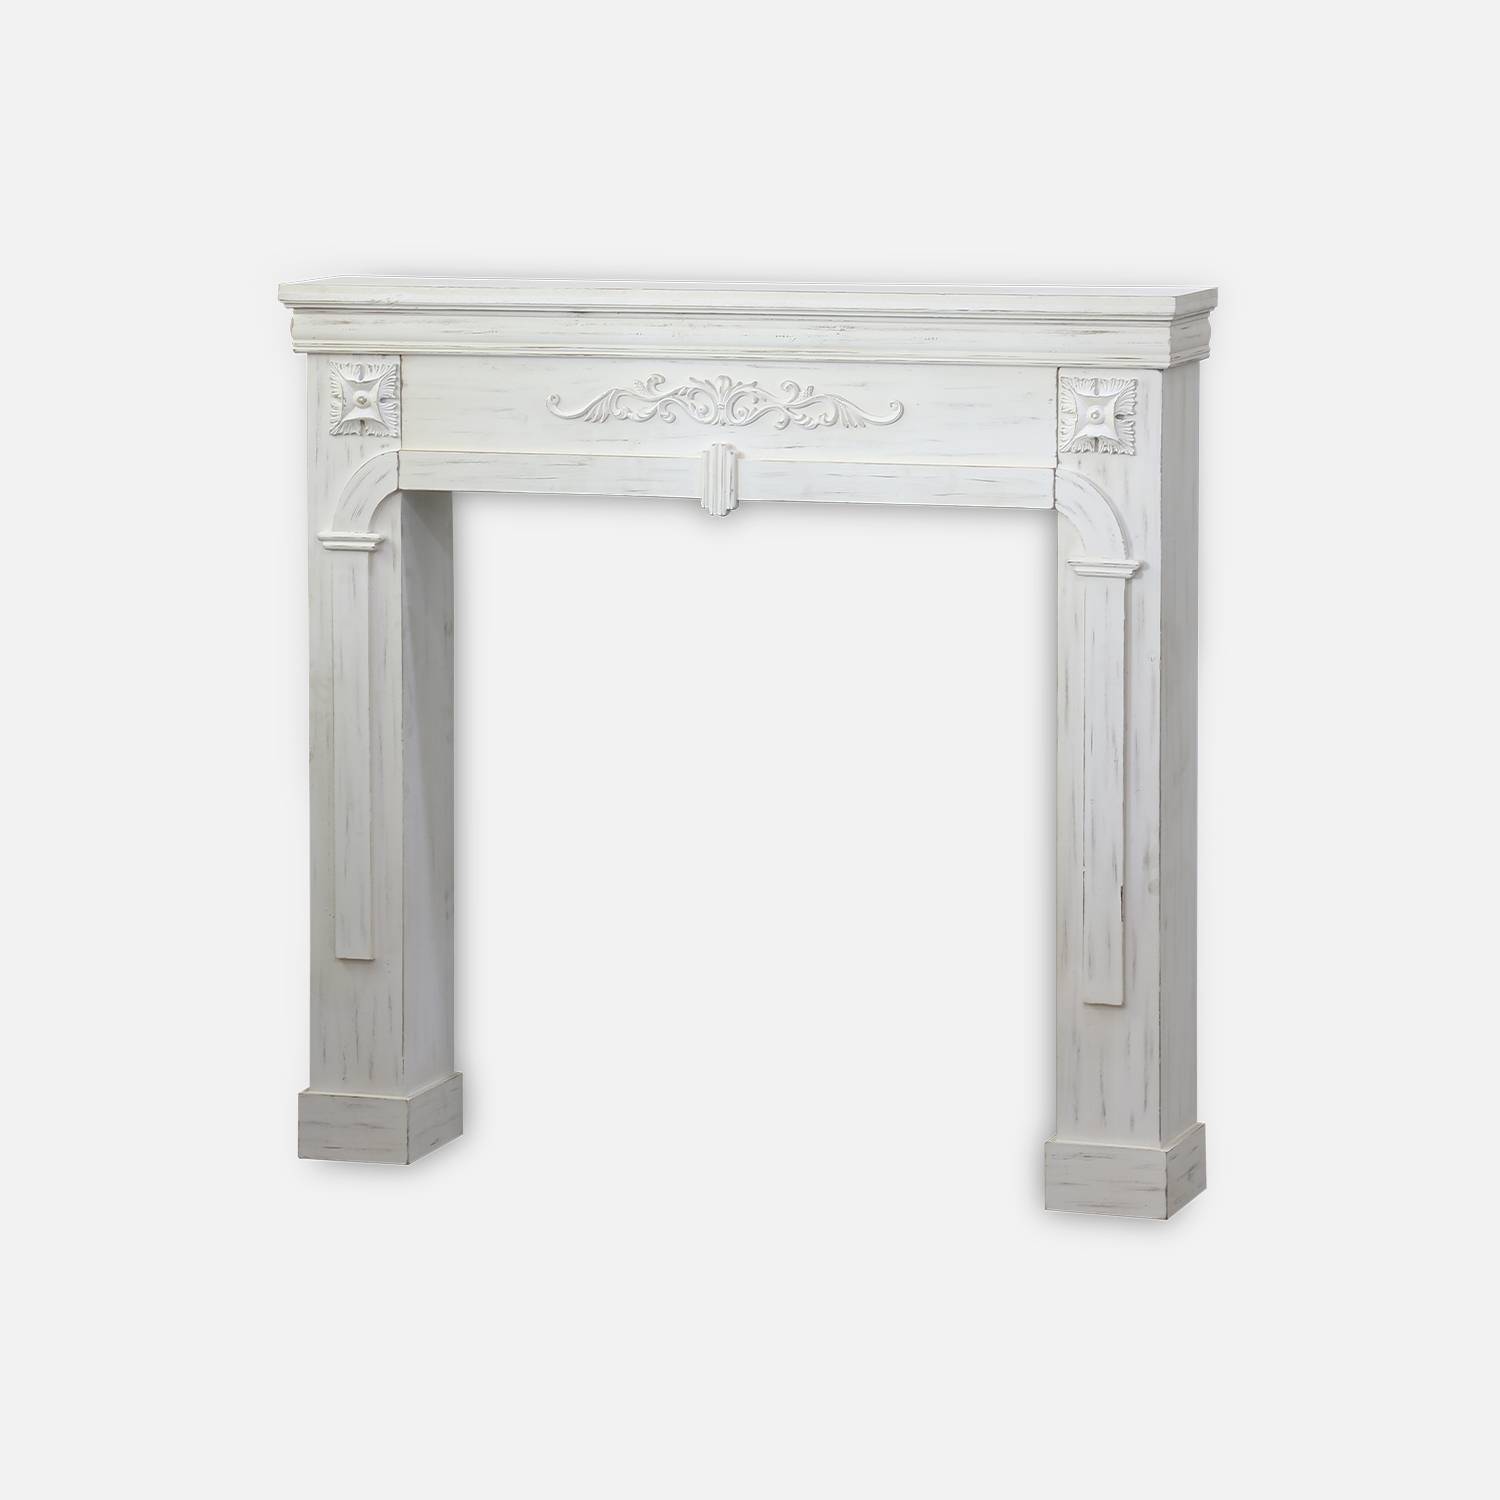 Decorative fireplace surround, MDF with firwood veneer, 104x17x100cm - Romance - Vintage White Photo3